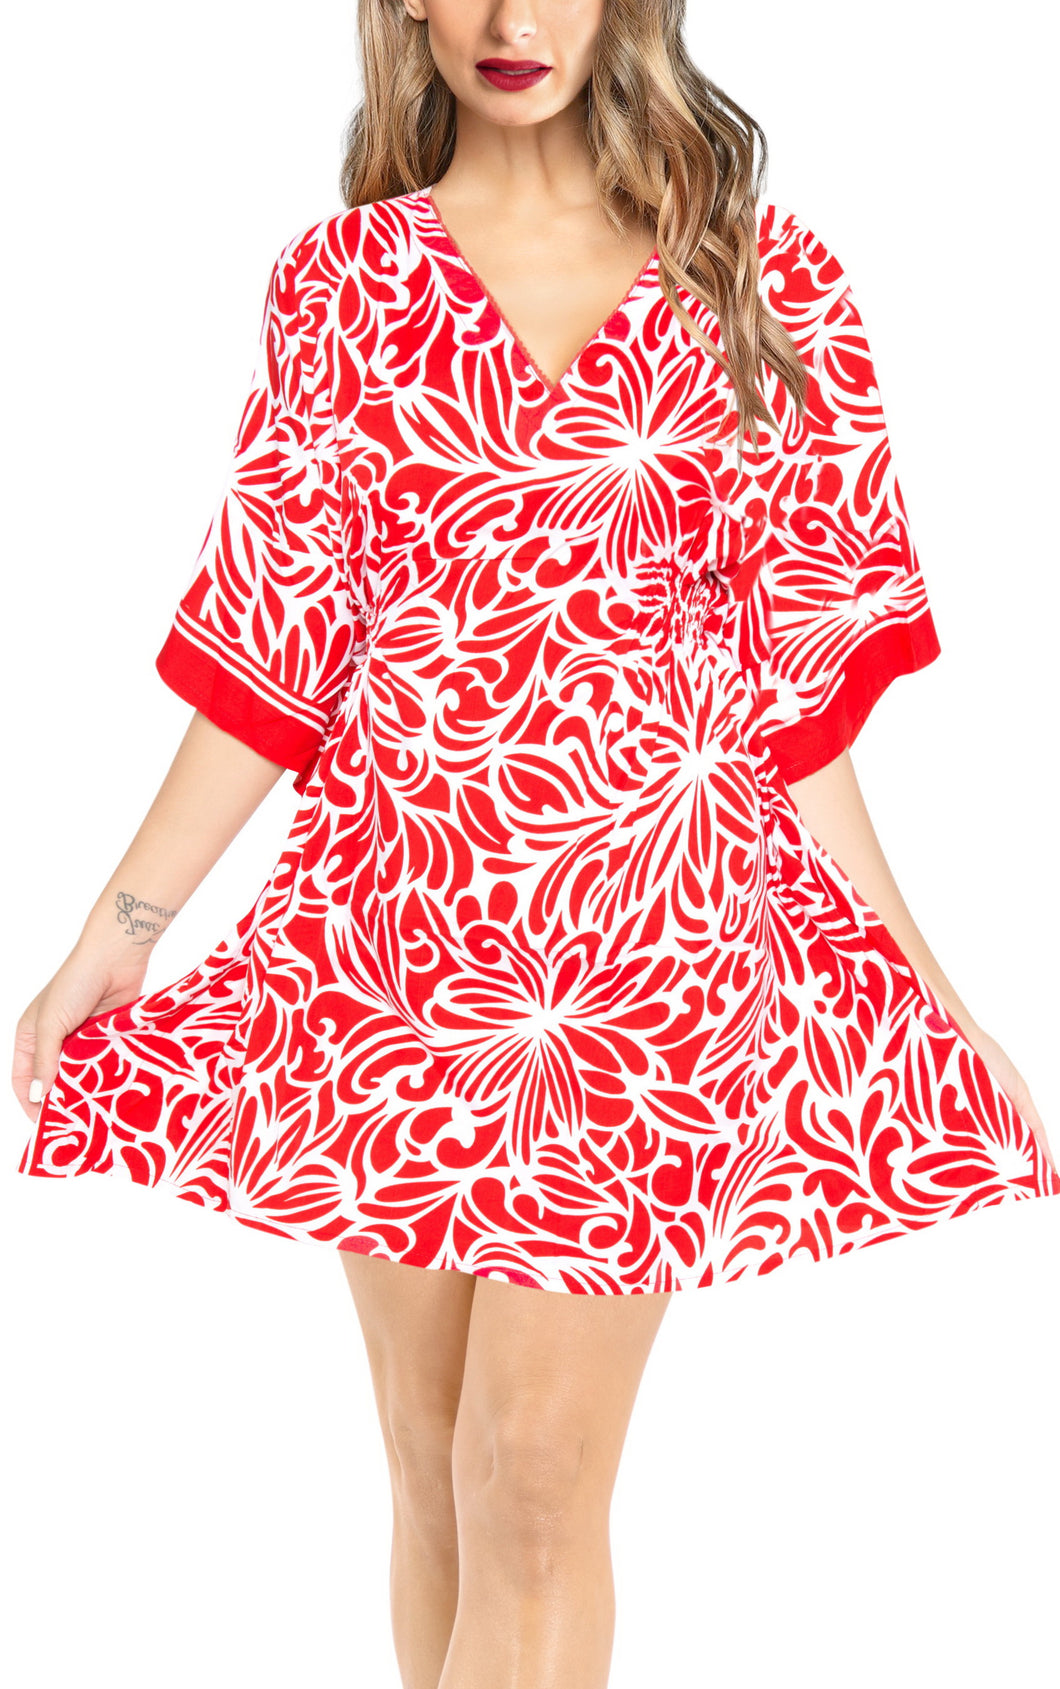 Women's Red Swimwear Swimsuit Beachwear Bikini Cover up Kimono Caftan Dress